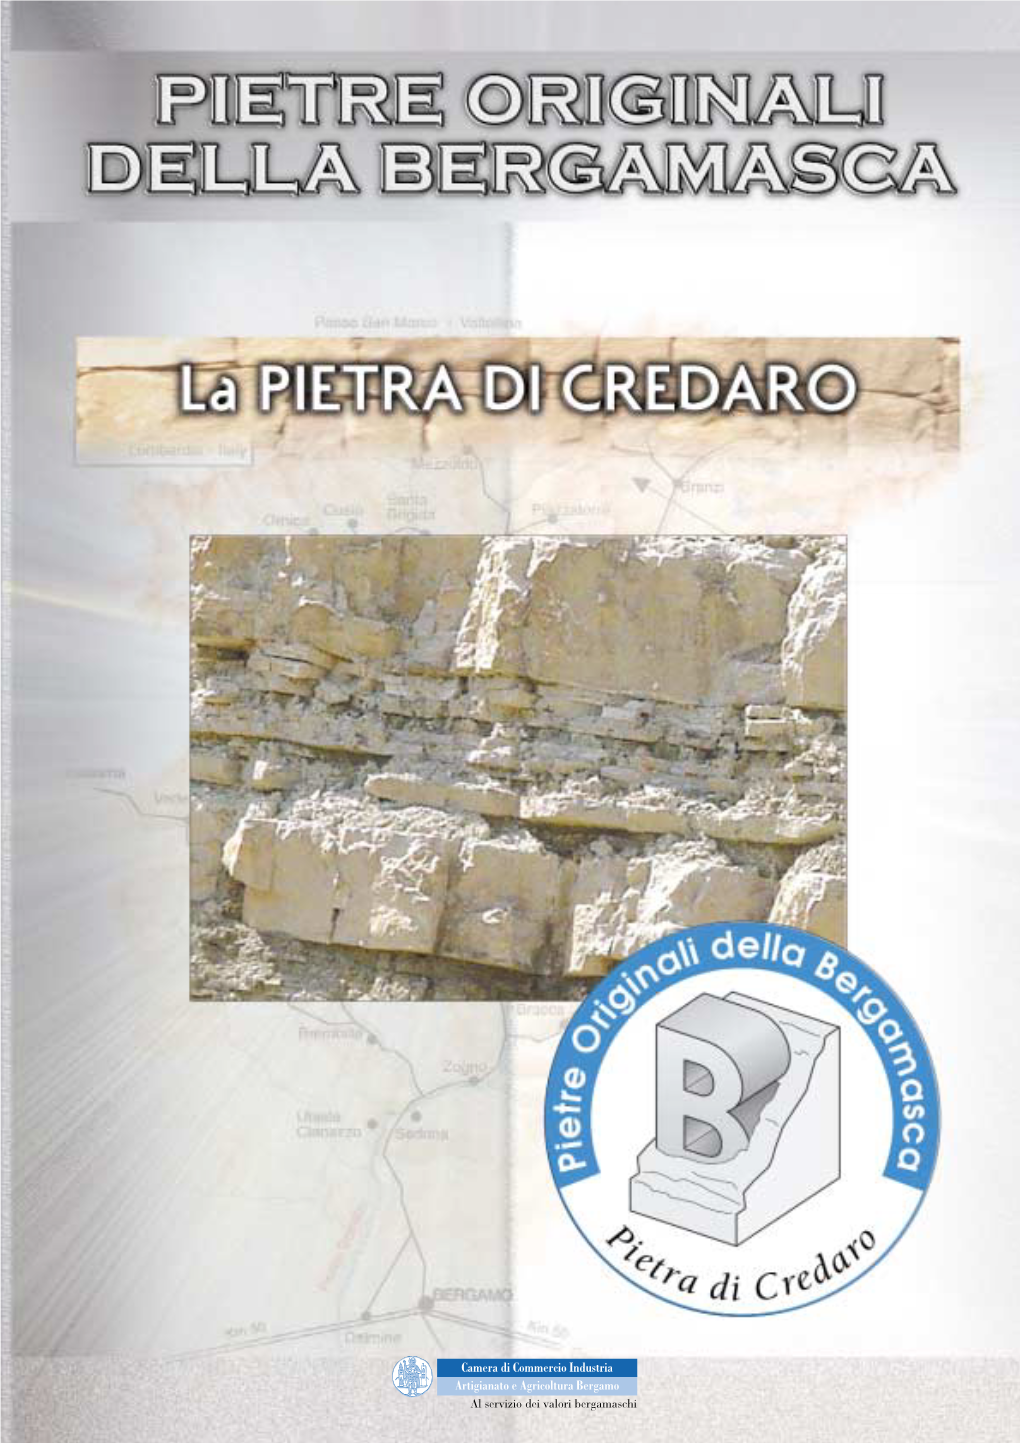 Pietra Di Credaro Medolo 2658 172(Carico Perp.) 161.2 23 0.66 8.6 0.61 165(Carico Par.)